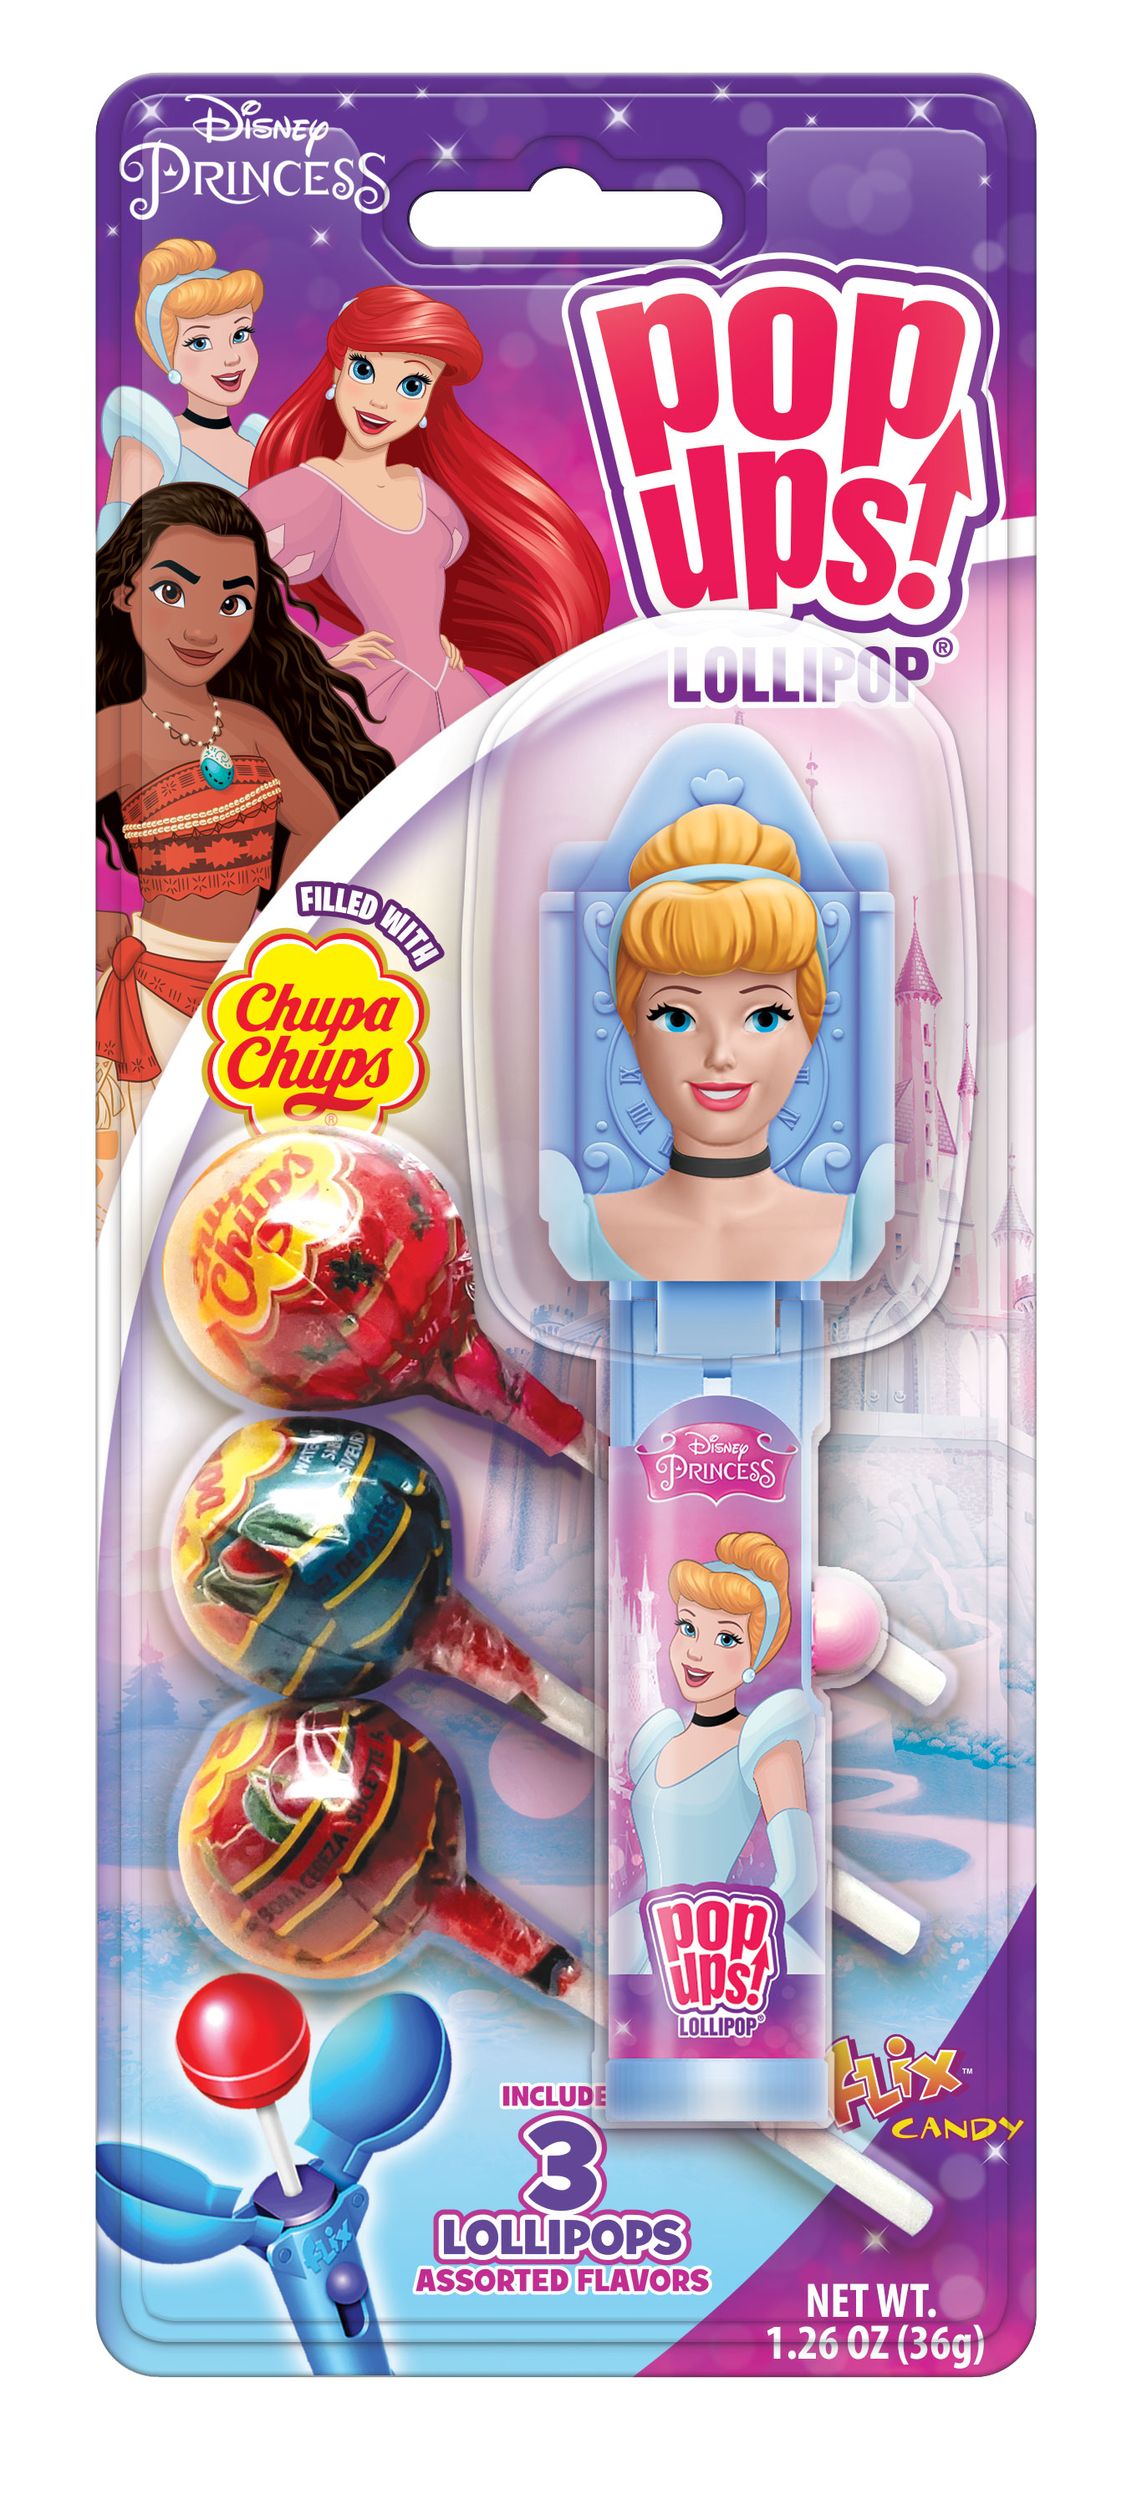 Disney Cinderella Wedding Day Cinderella Doll – Super Mart